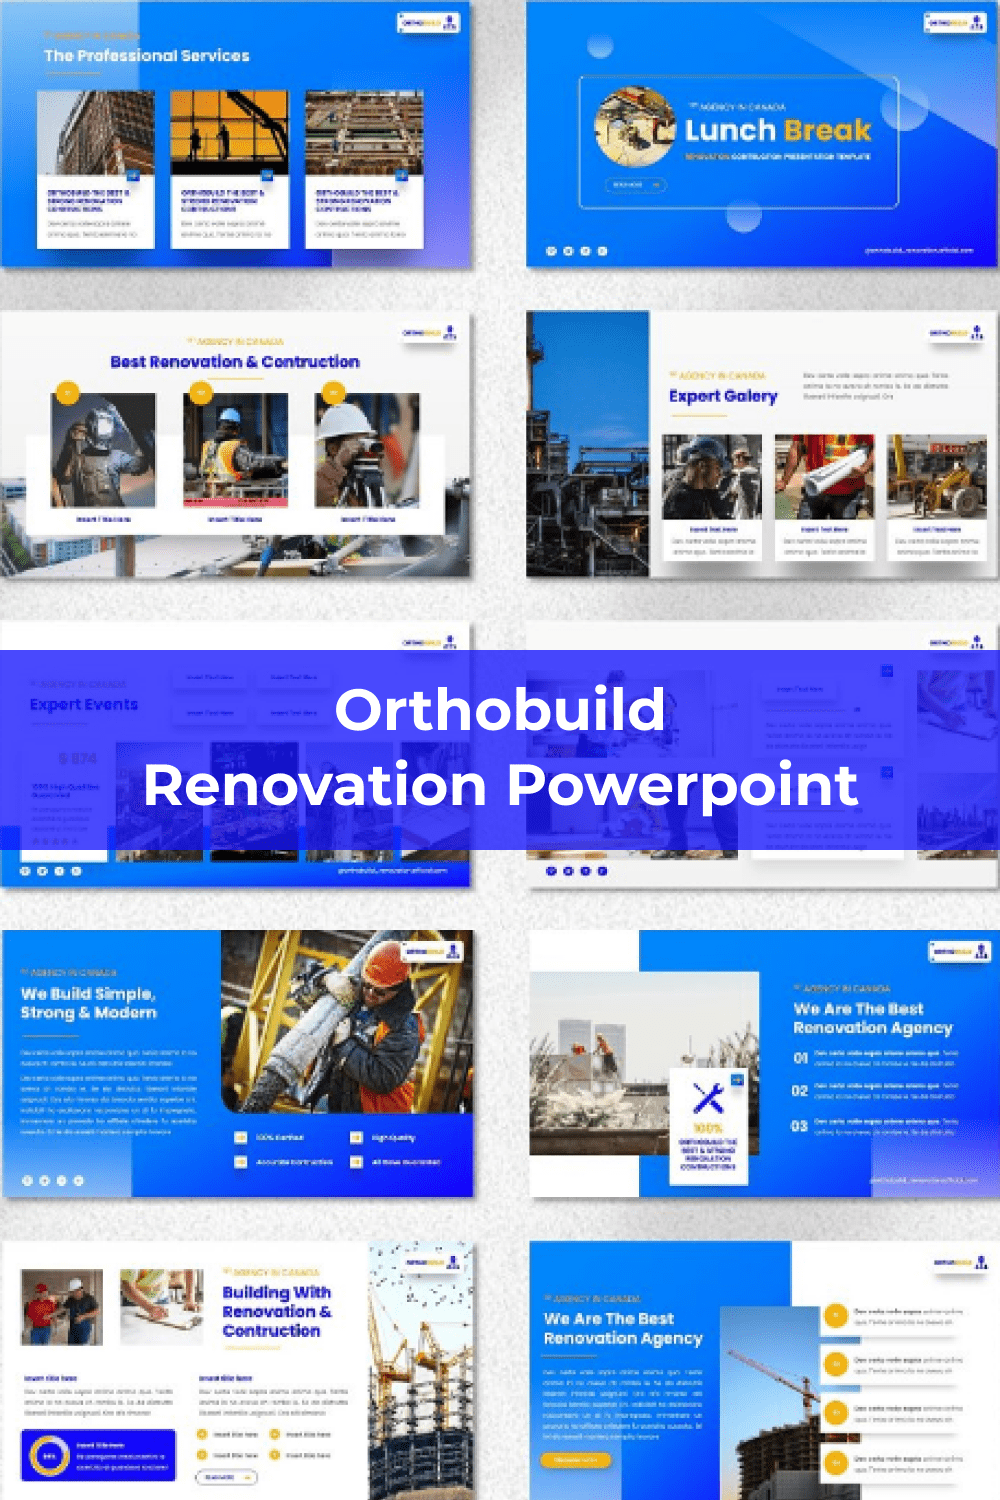 Orthobuild - Renovation Powerpoint by MasterBundles Pinterest Collage Image.